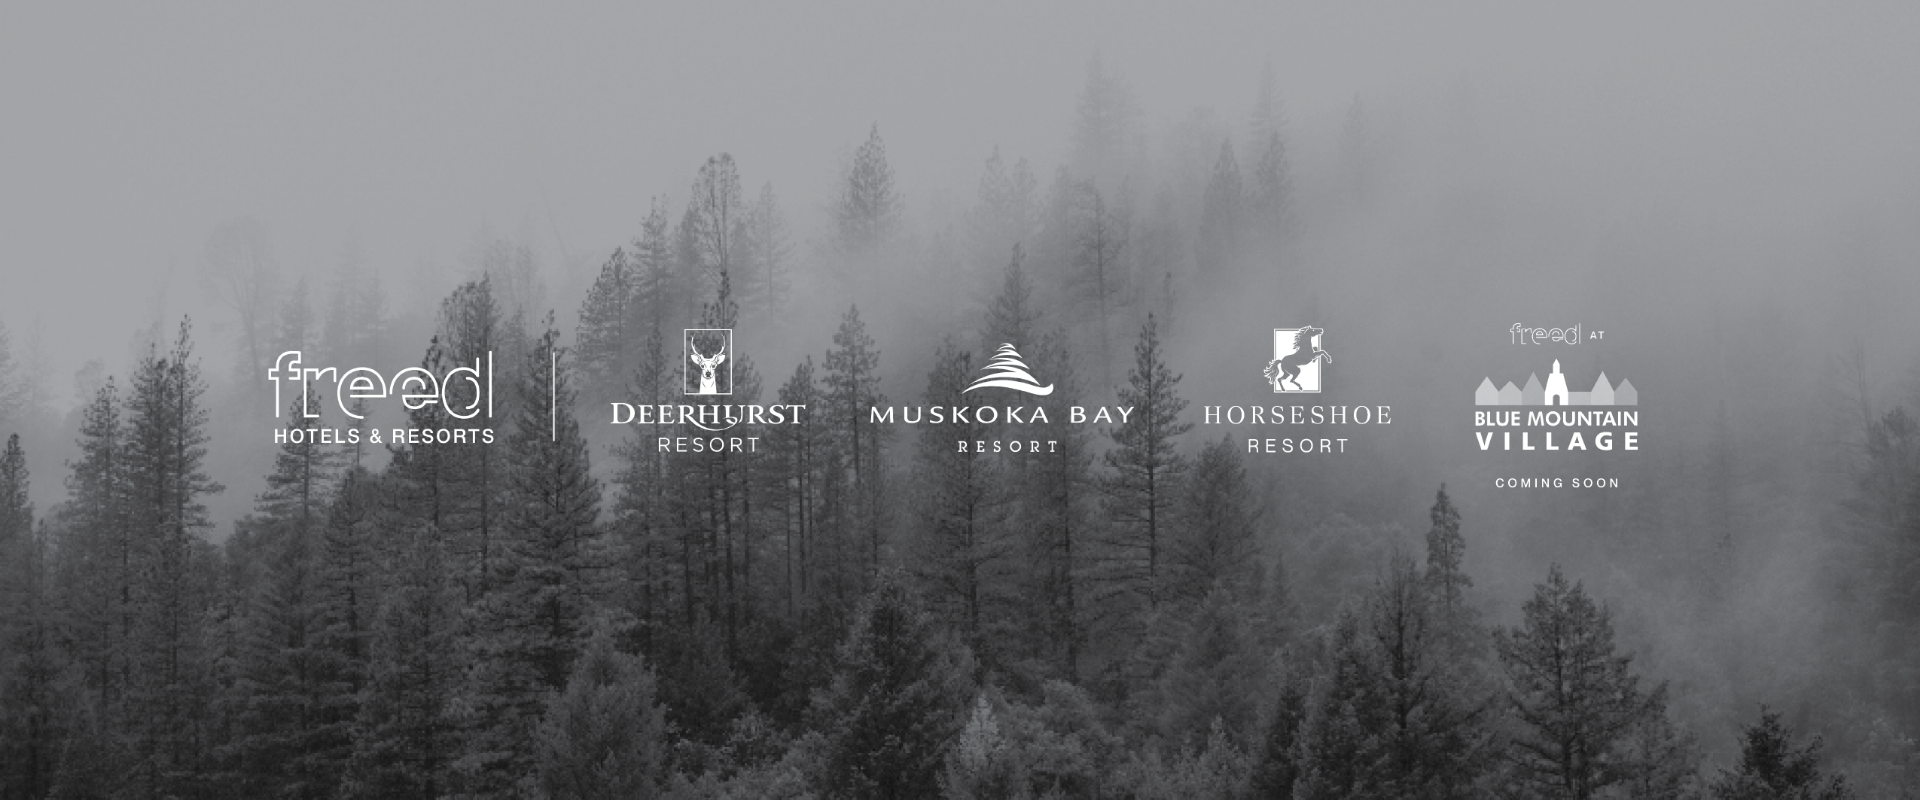 Freed Hotels & Resorts logo lockup with Deerhurst Resort, Muskoka Bay Resort, Horseshoe Resort, and Freed at Blue Mountain logos.